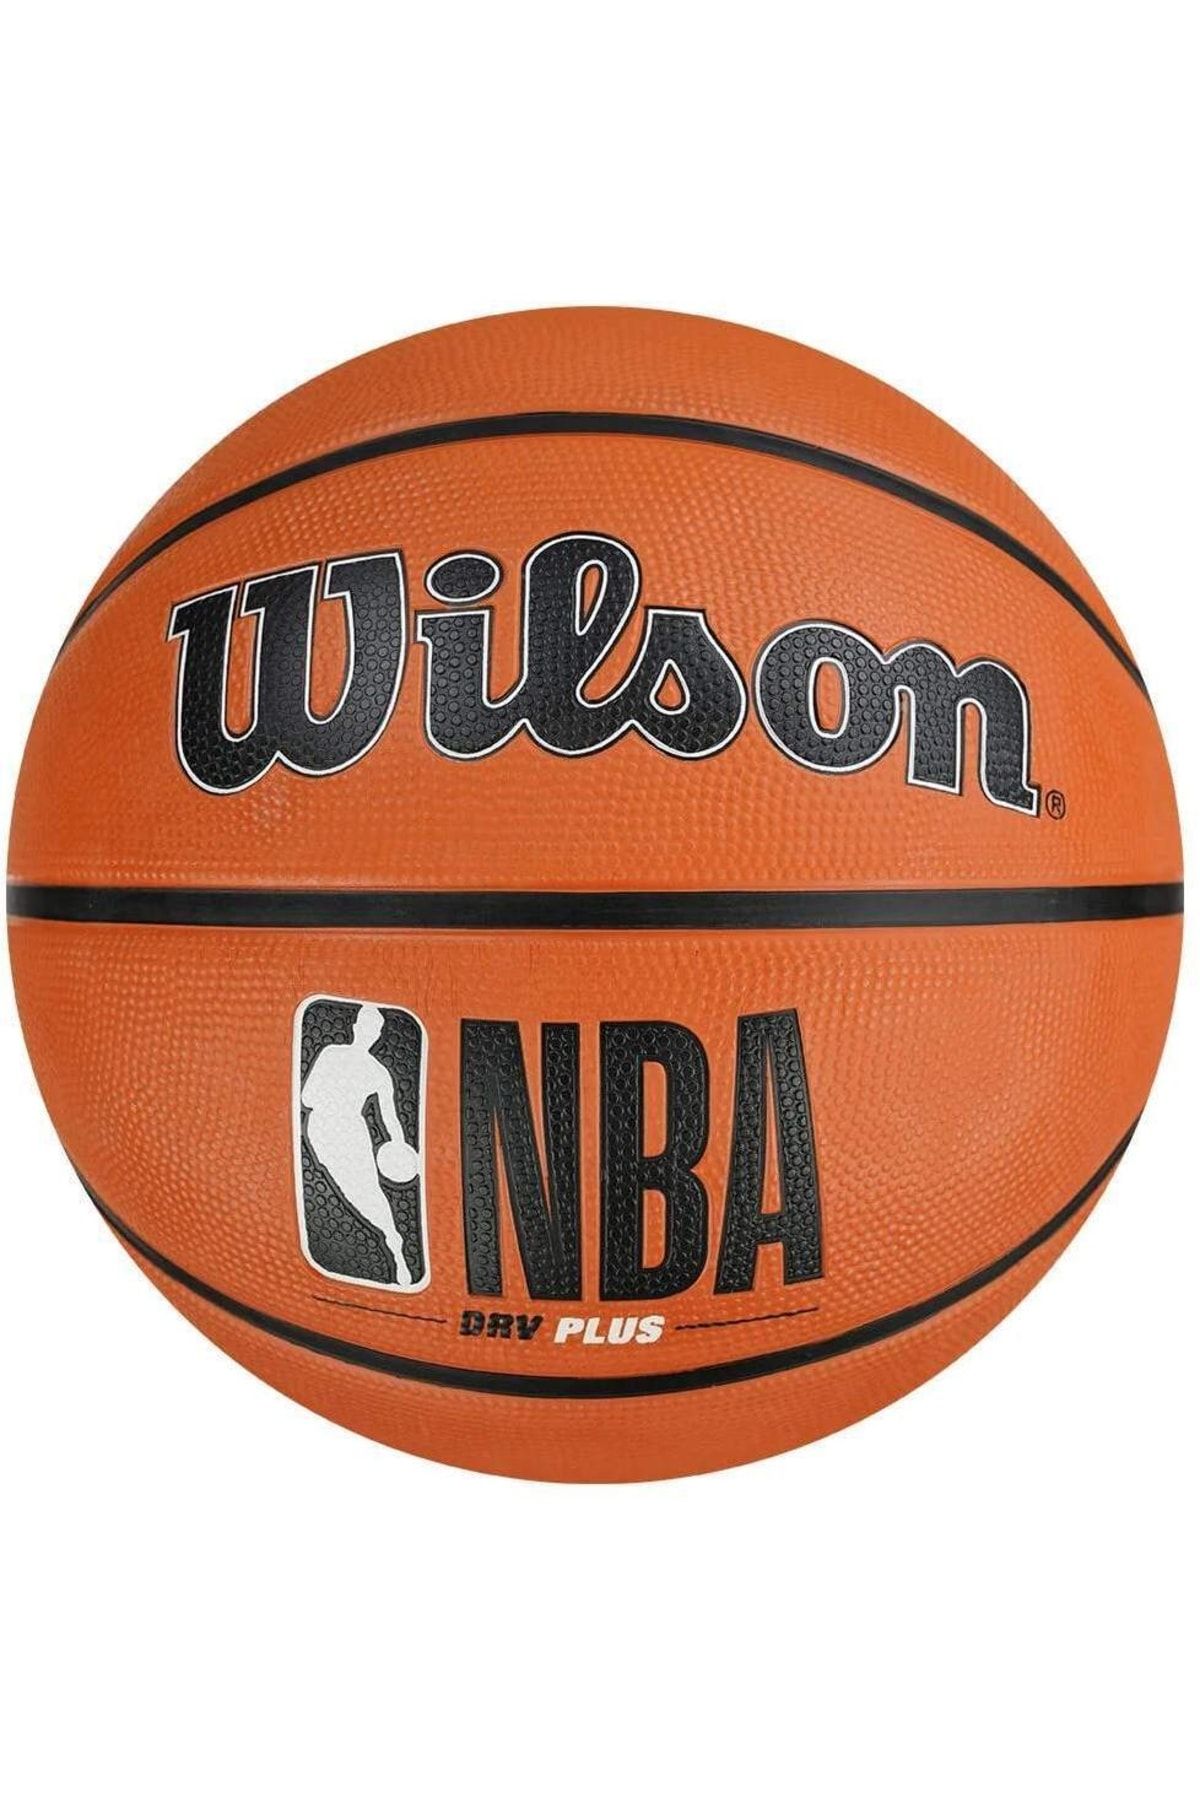 Wilson Nba Drv Plus Basketbol Topu Size 7 (wtb9200x)